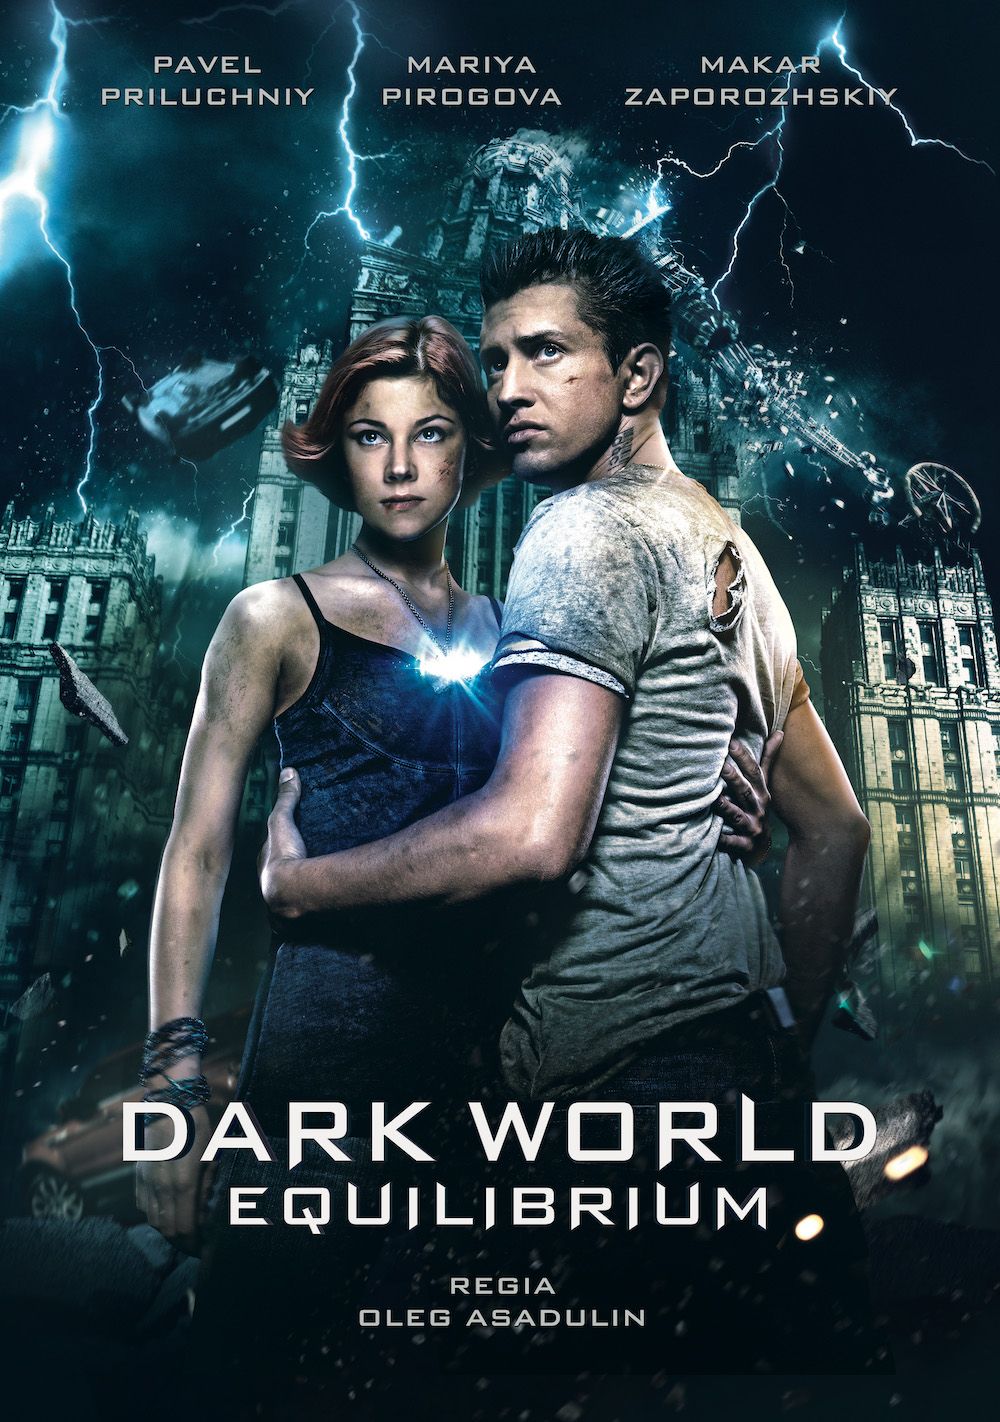 Dark World 2 Equilibrium (2013) Hindi Dubbed Full Movie